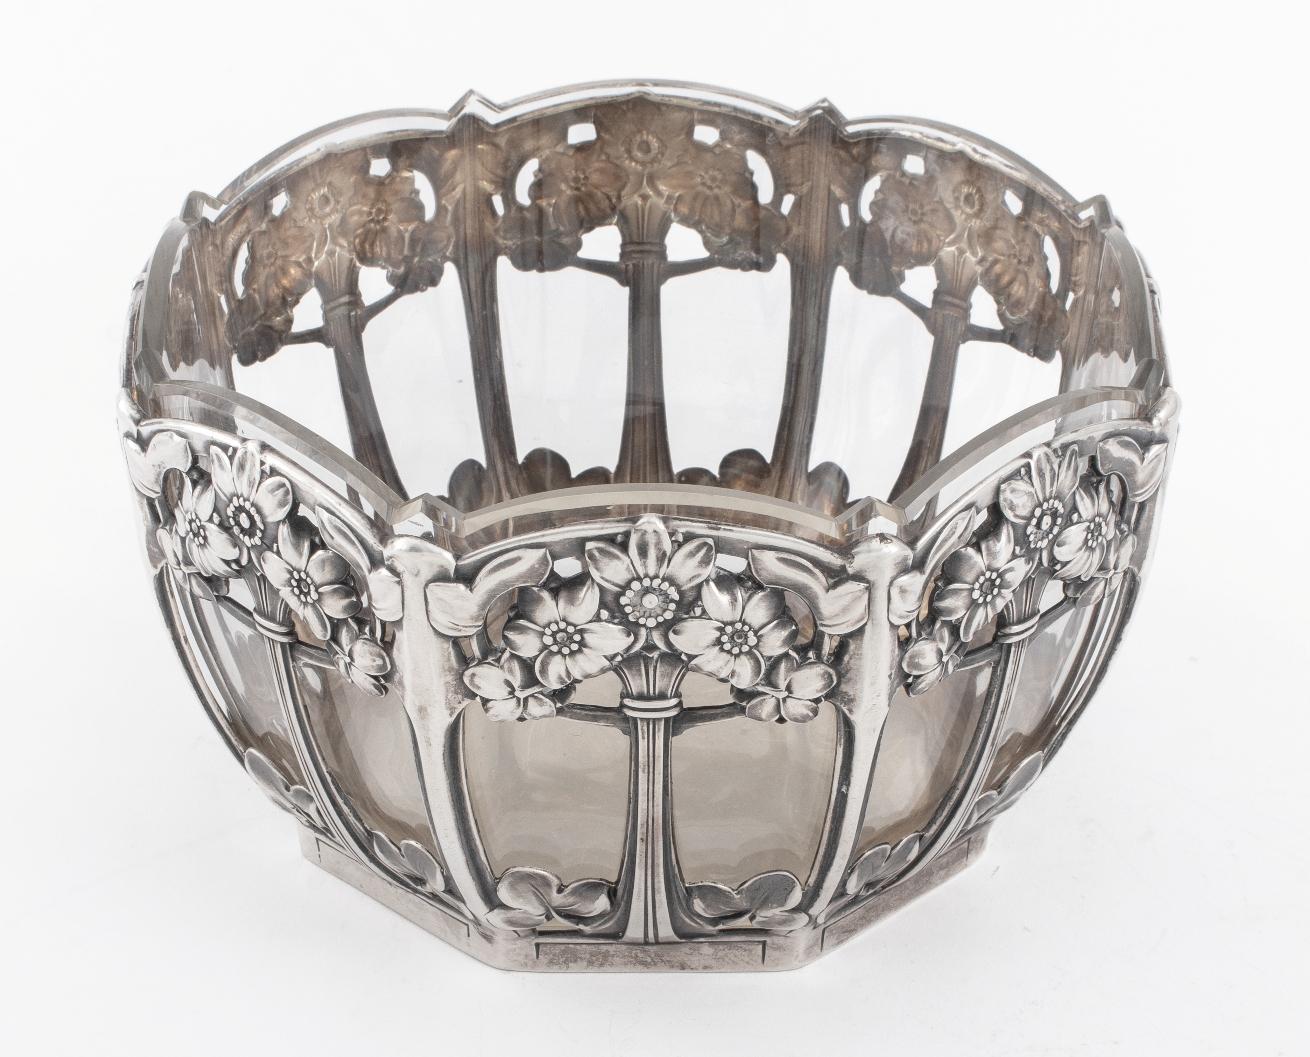 20th Century L. Posen Jugendstil Silver and Glass Bowl, circa 1905 For Sale